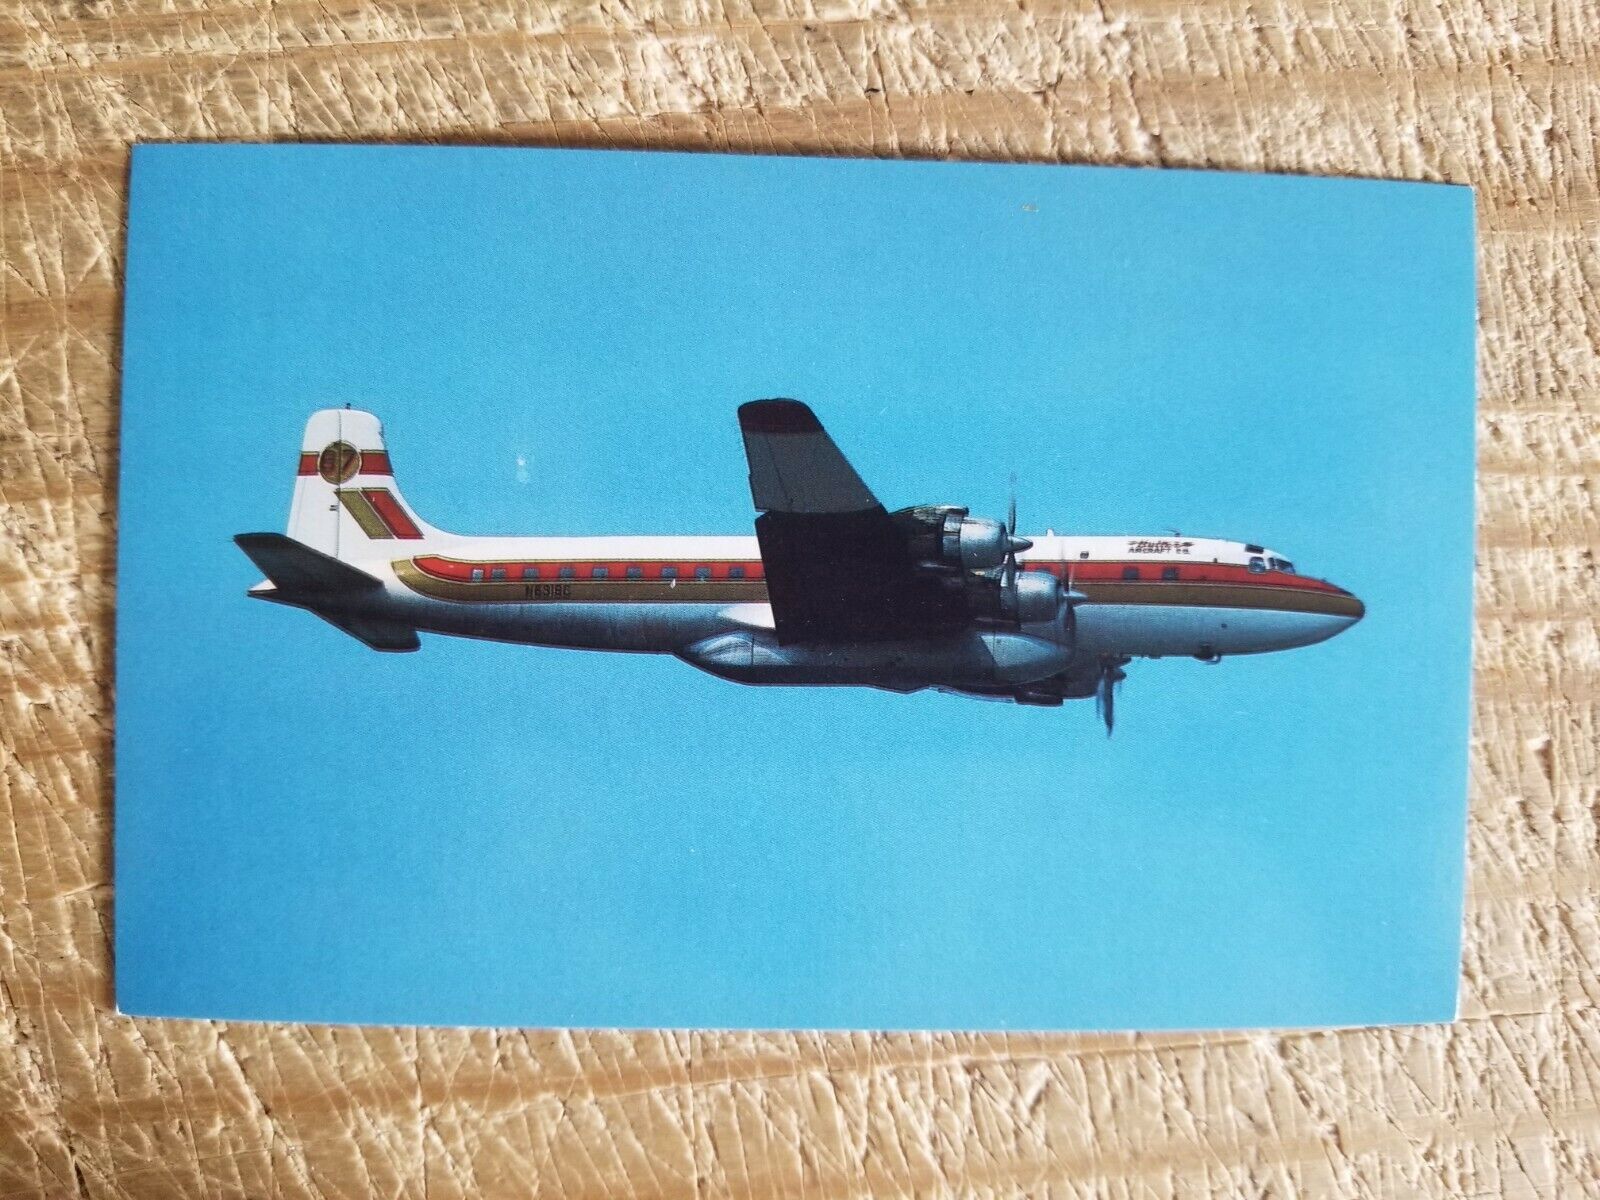 BUTLER AIRCRAFT COMPANY Douglas DC-7 Four Engine Propeller Airliner Postcard*P3